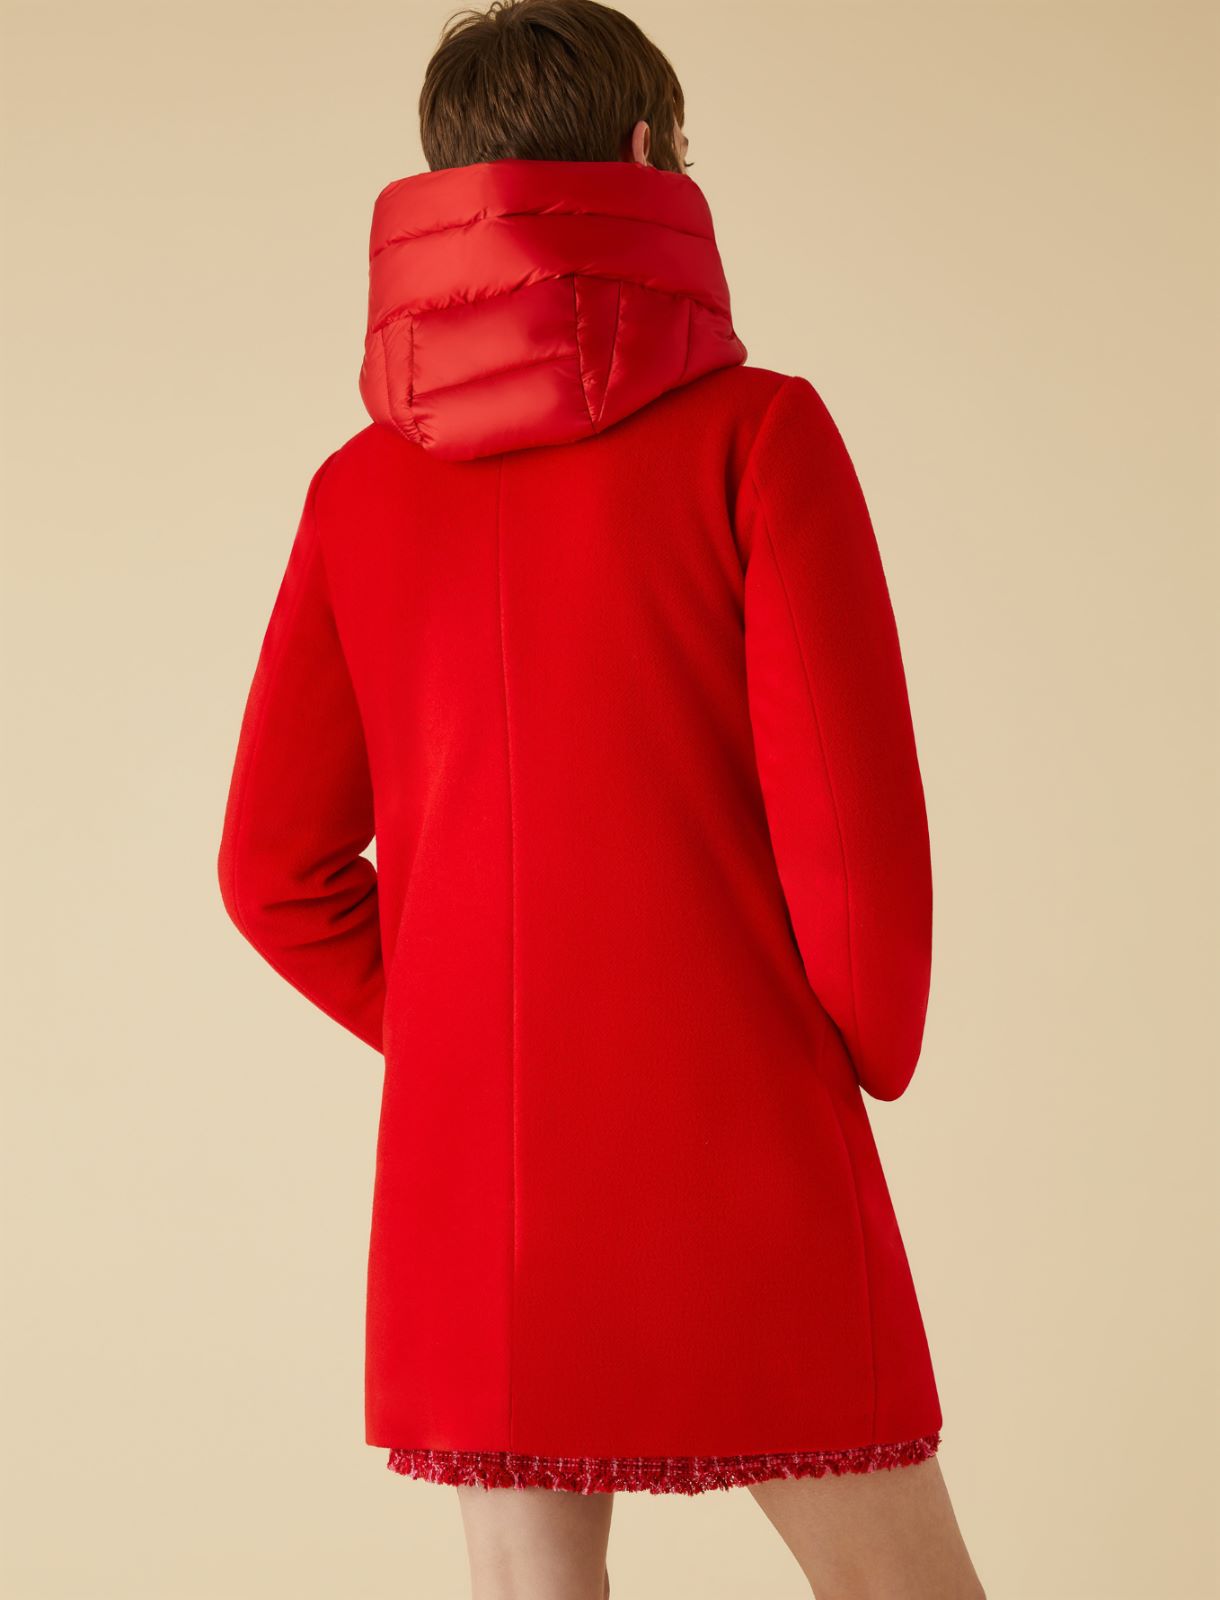 Mantel aus Wollstoff - Rot - Marella - 2